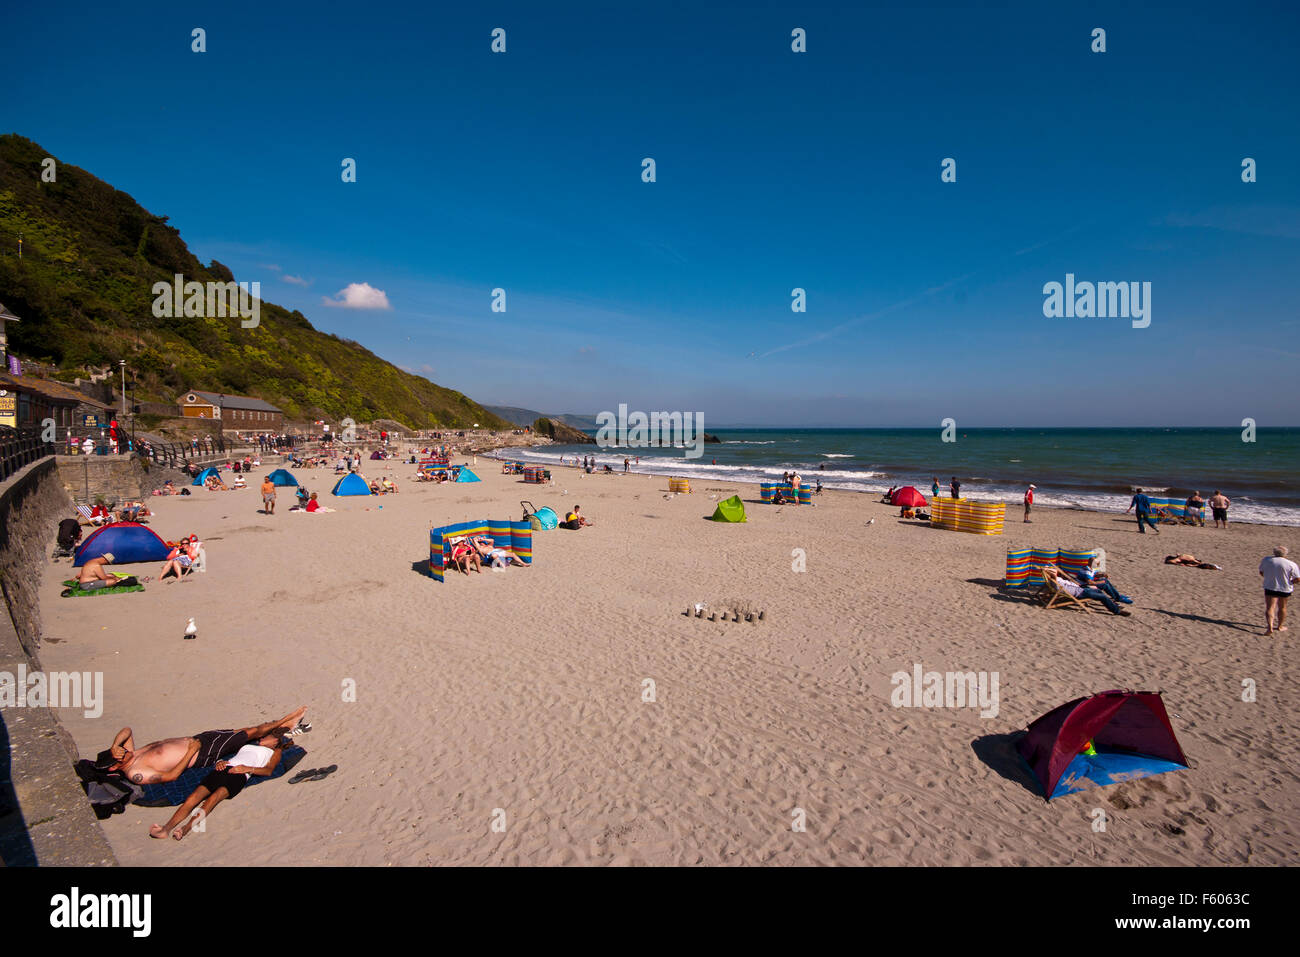 The Sandy Beach at Looe Cornwall England UK Stock Photo